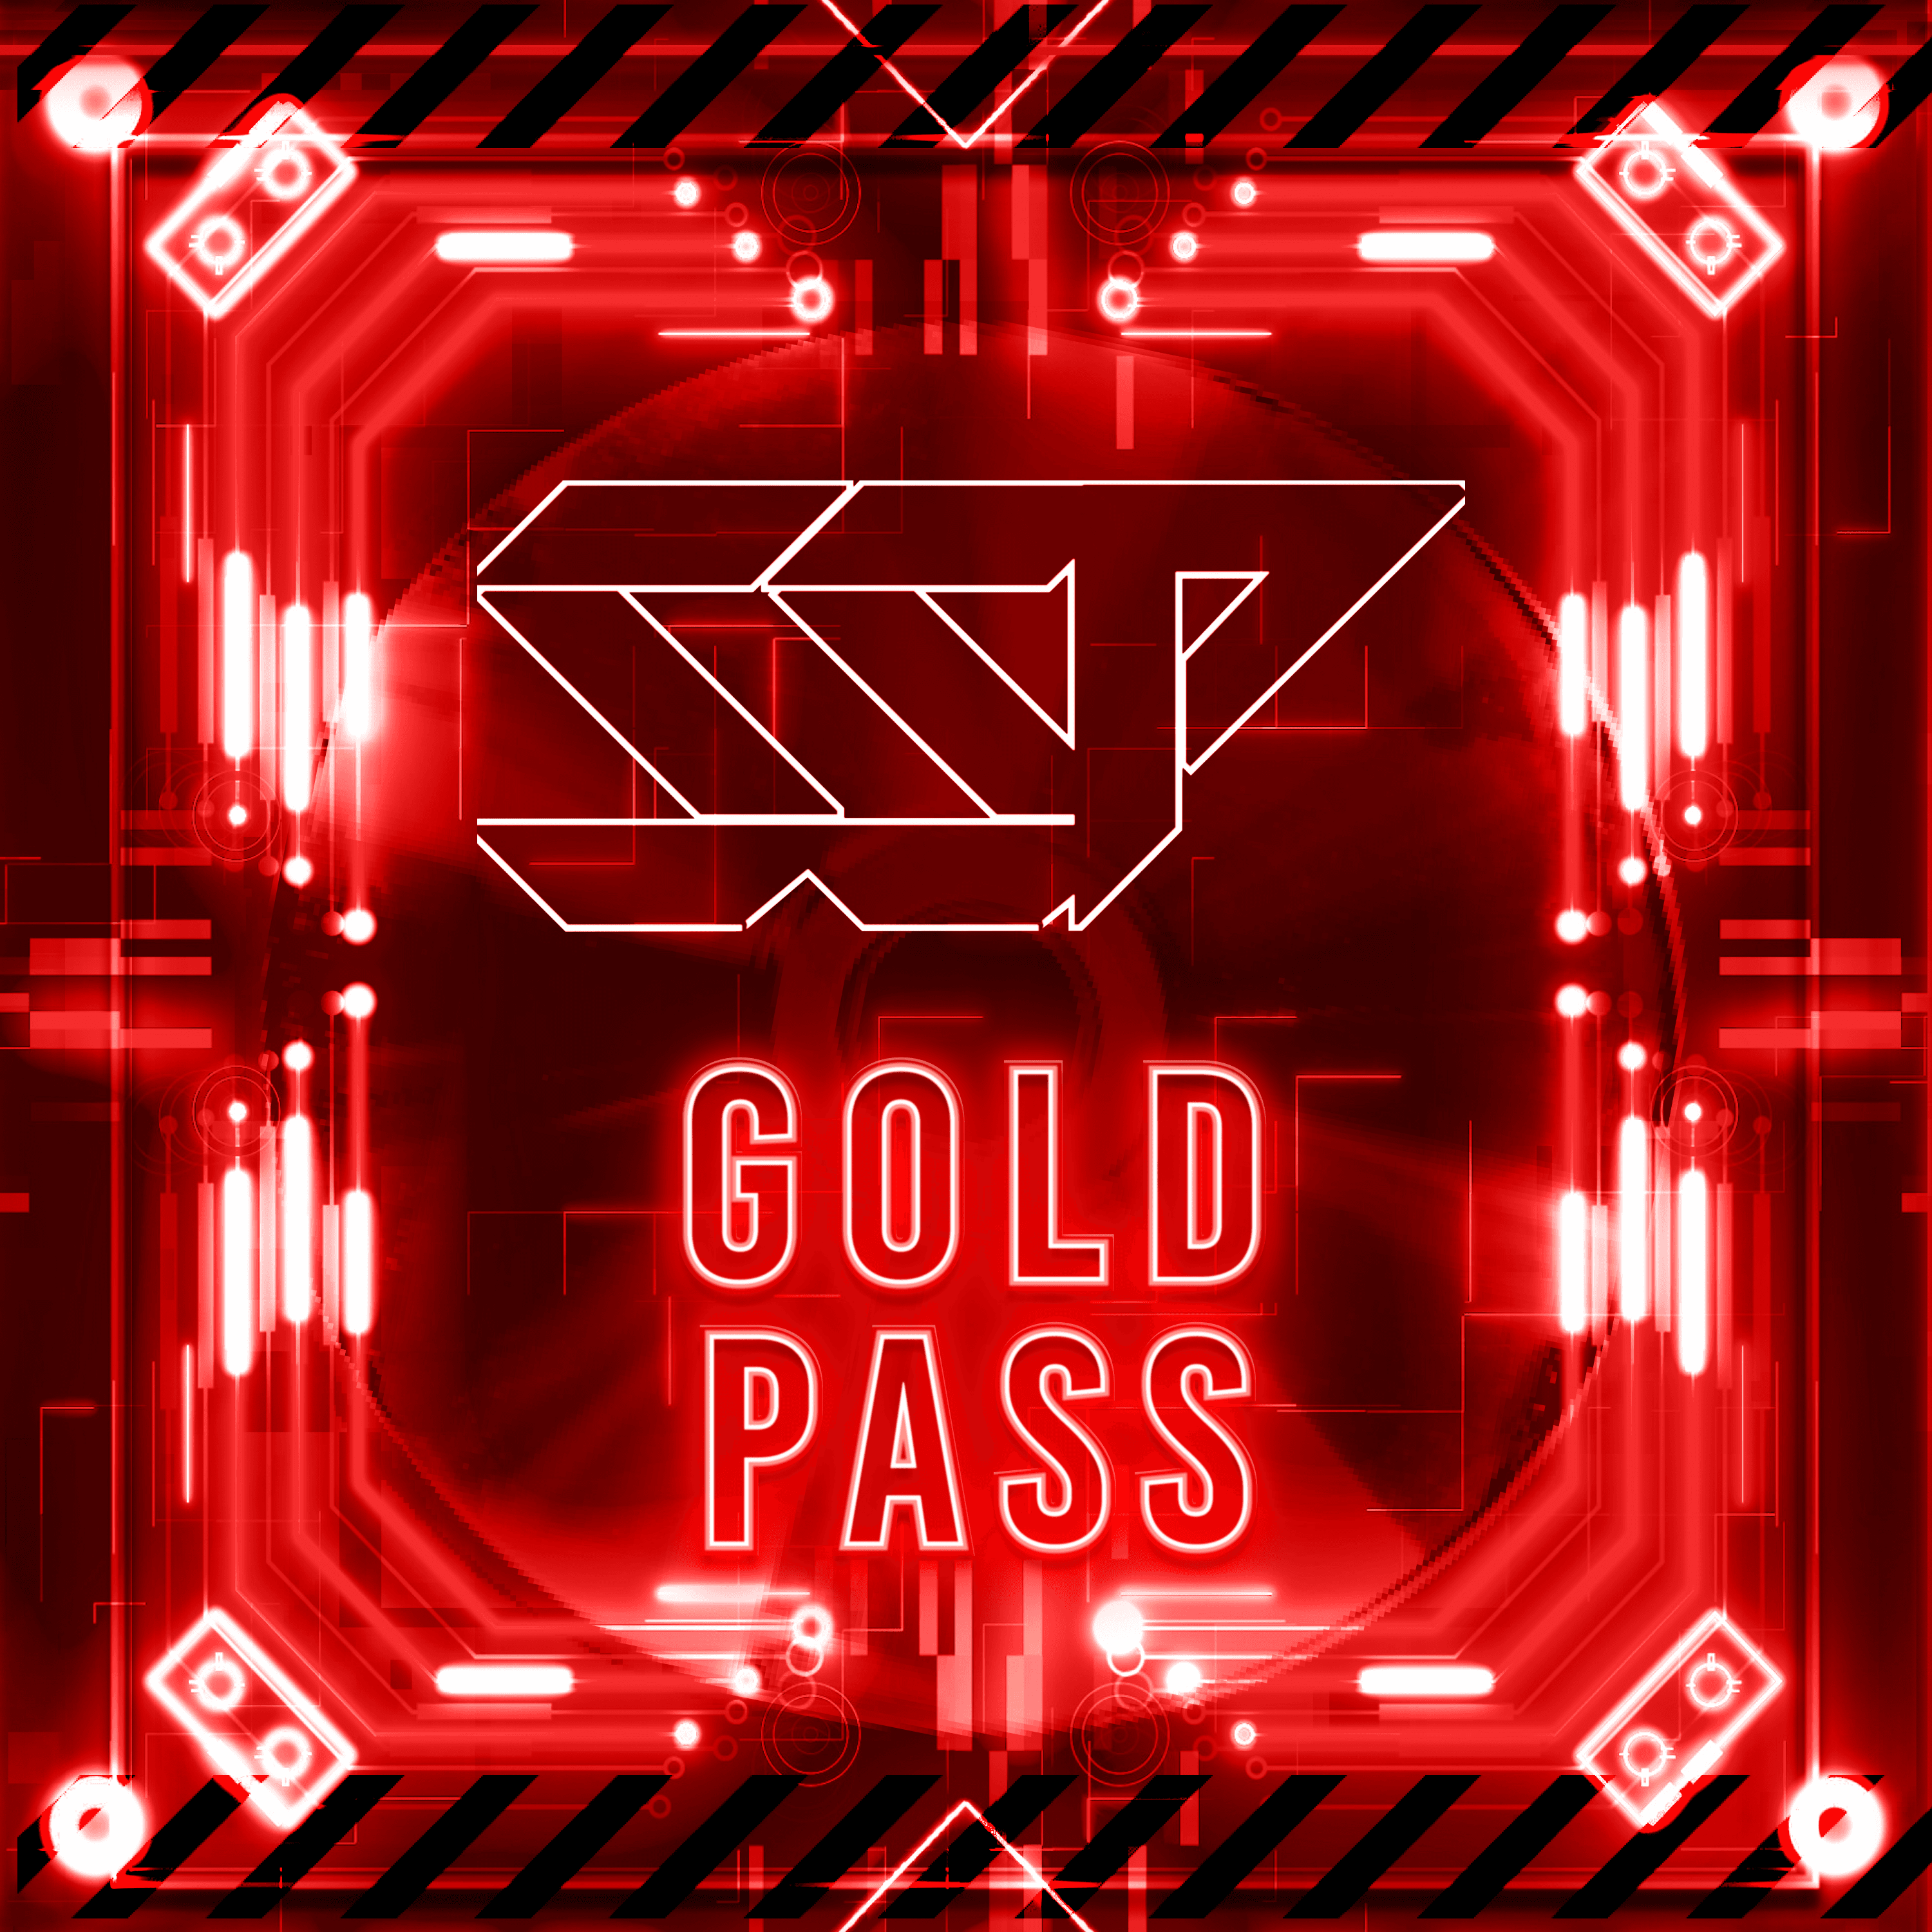 SSP Gold Pass Red